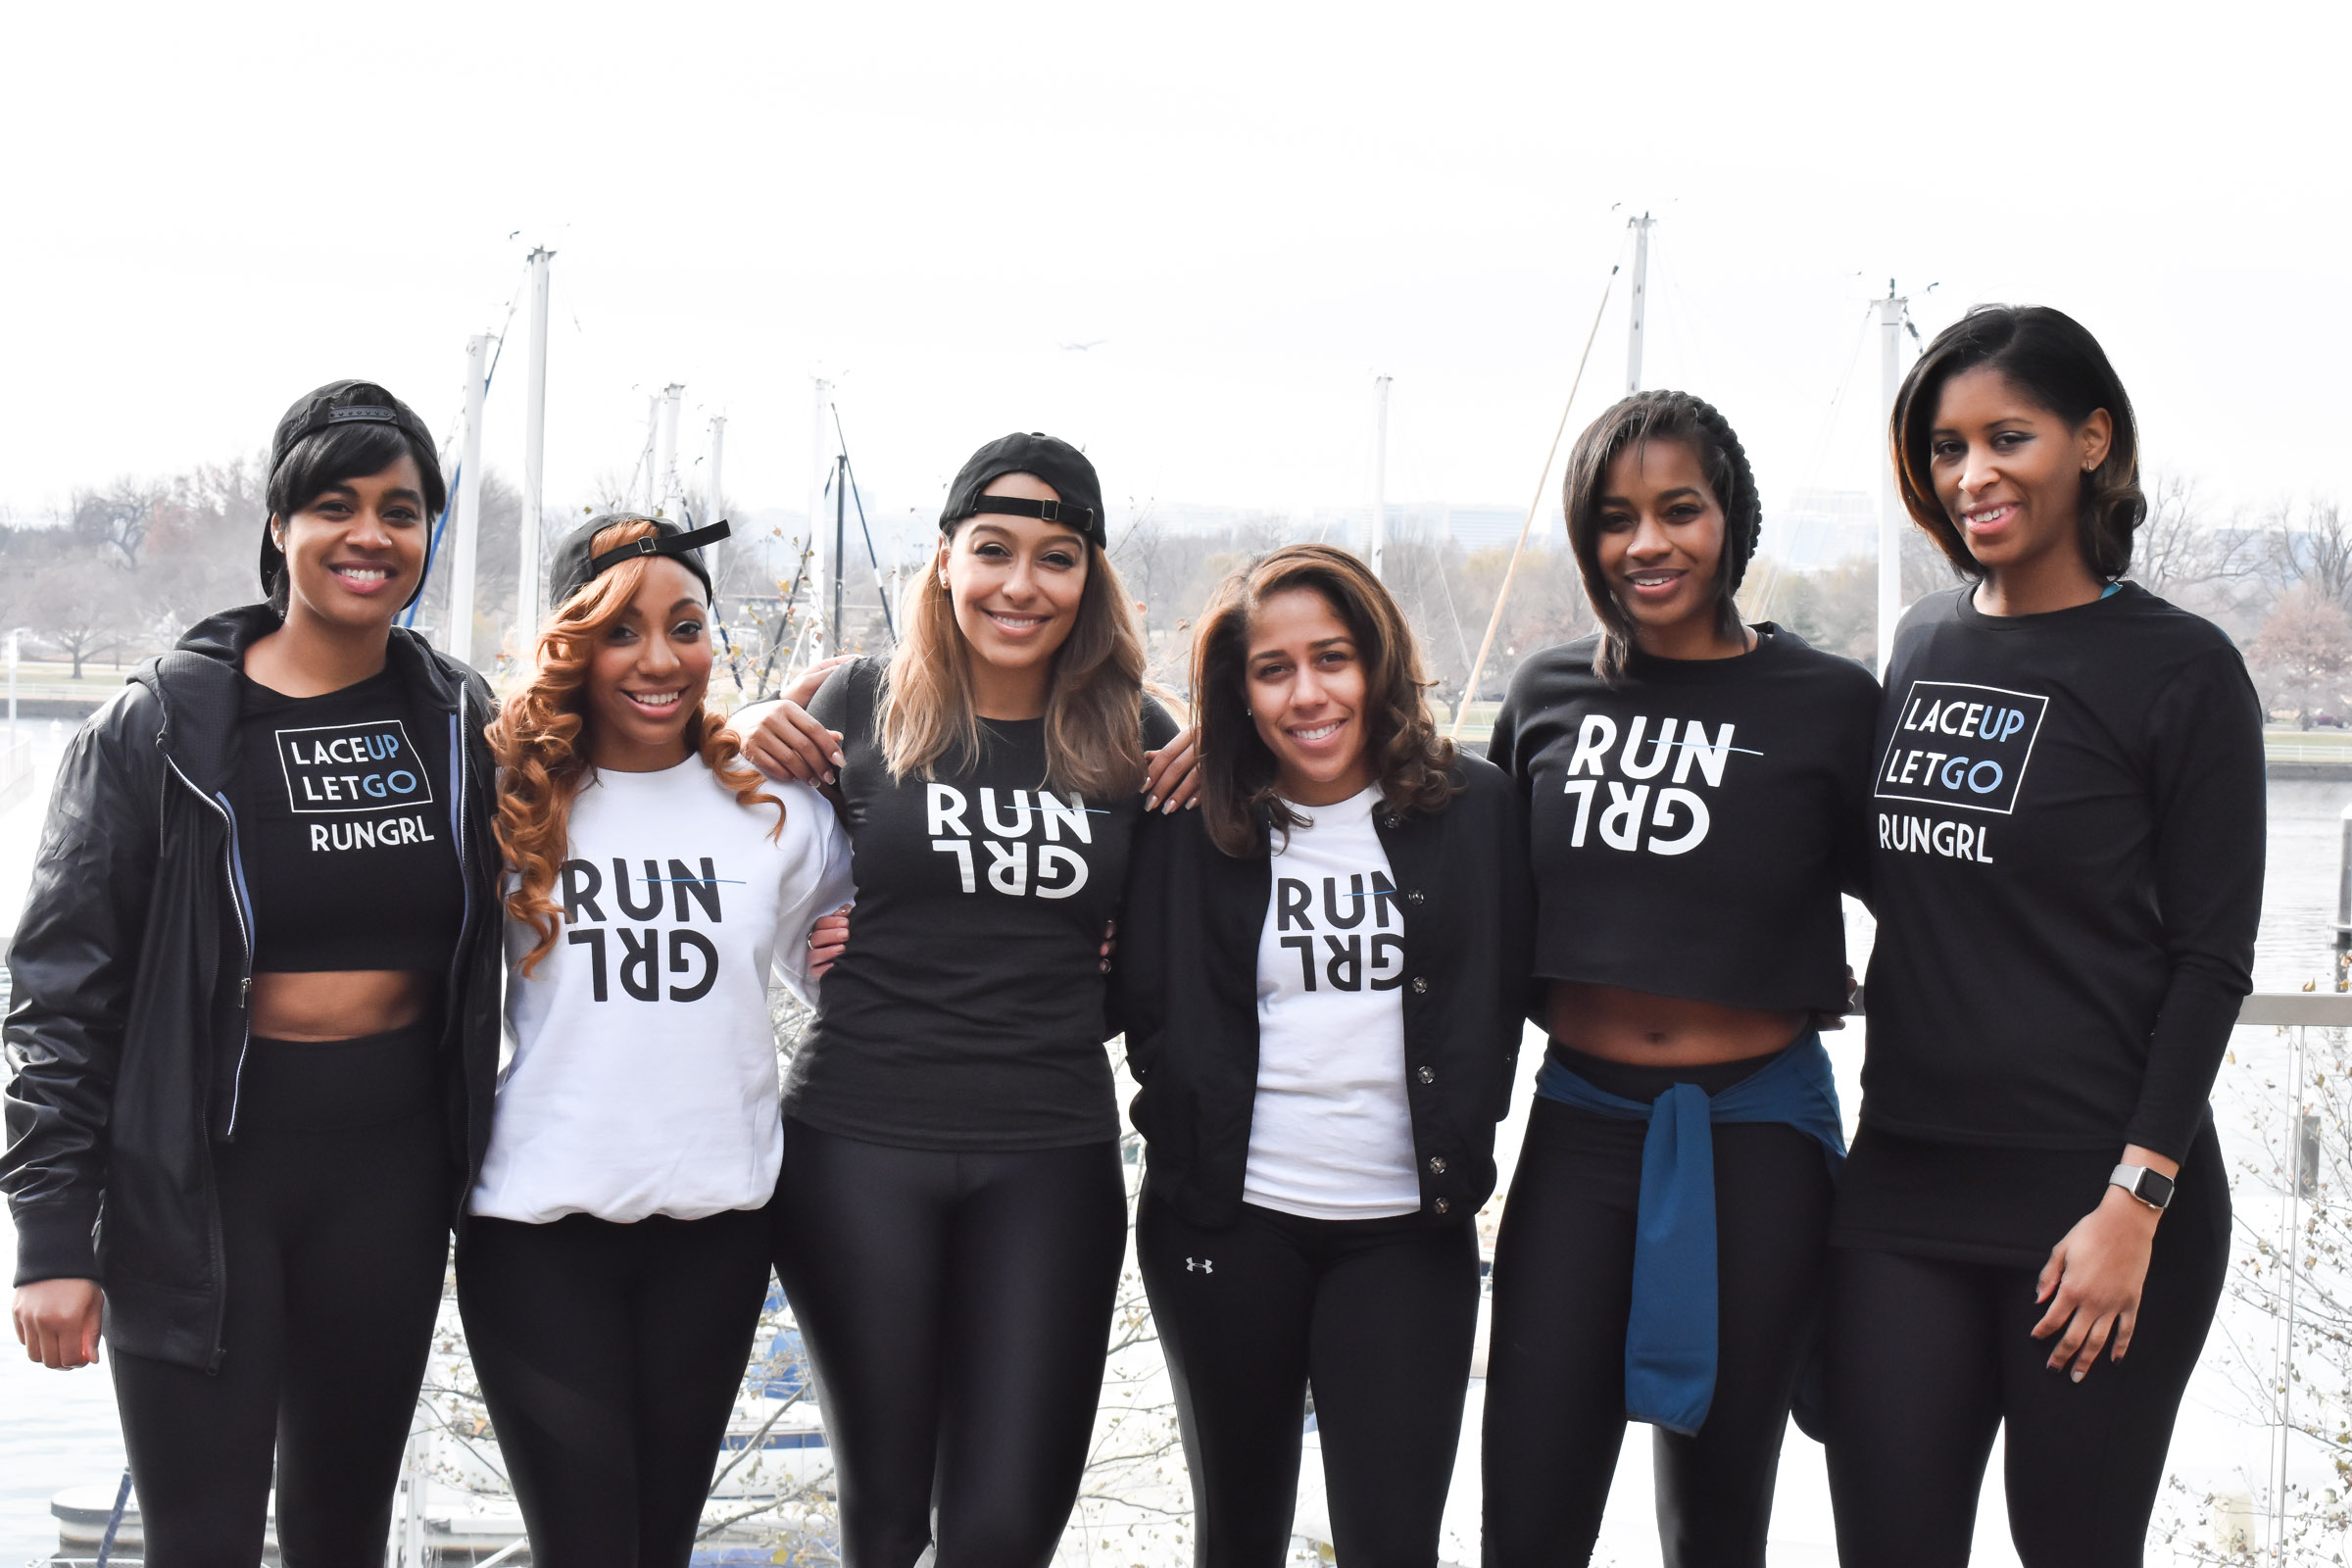 RUNGRL Co. Wants To Build a Platform for Black Women Runners